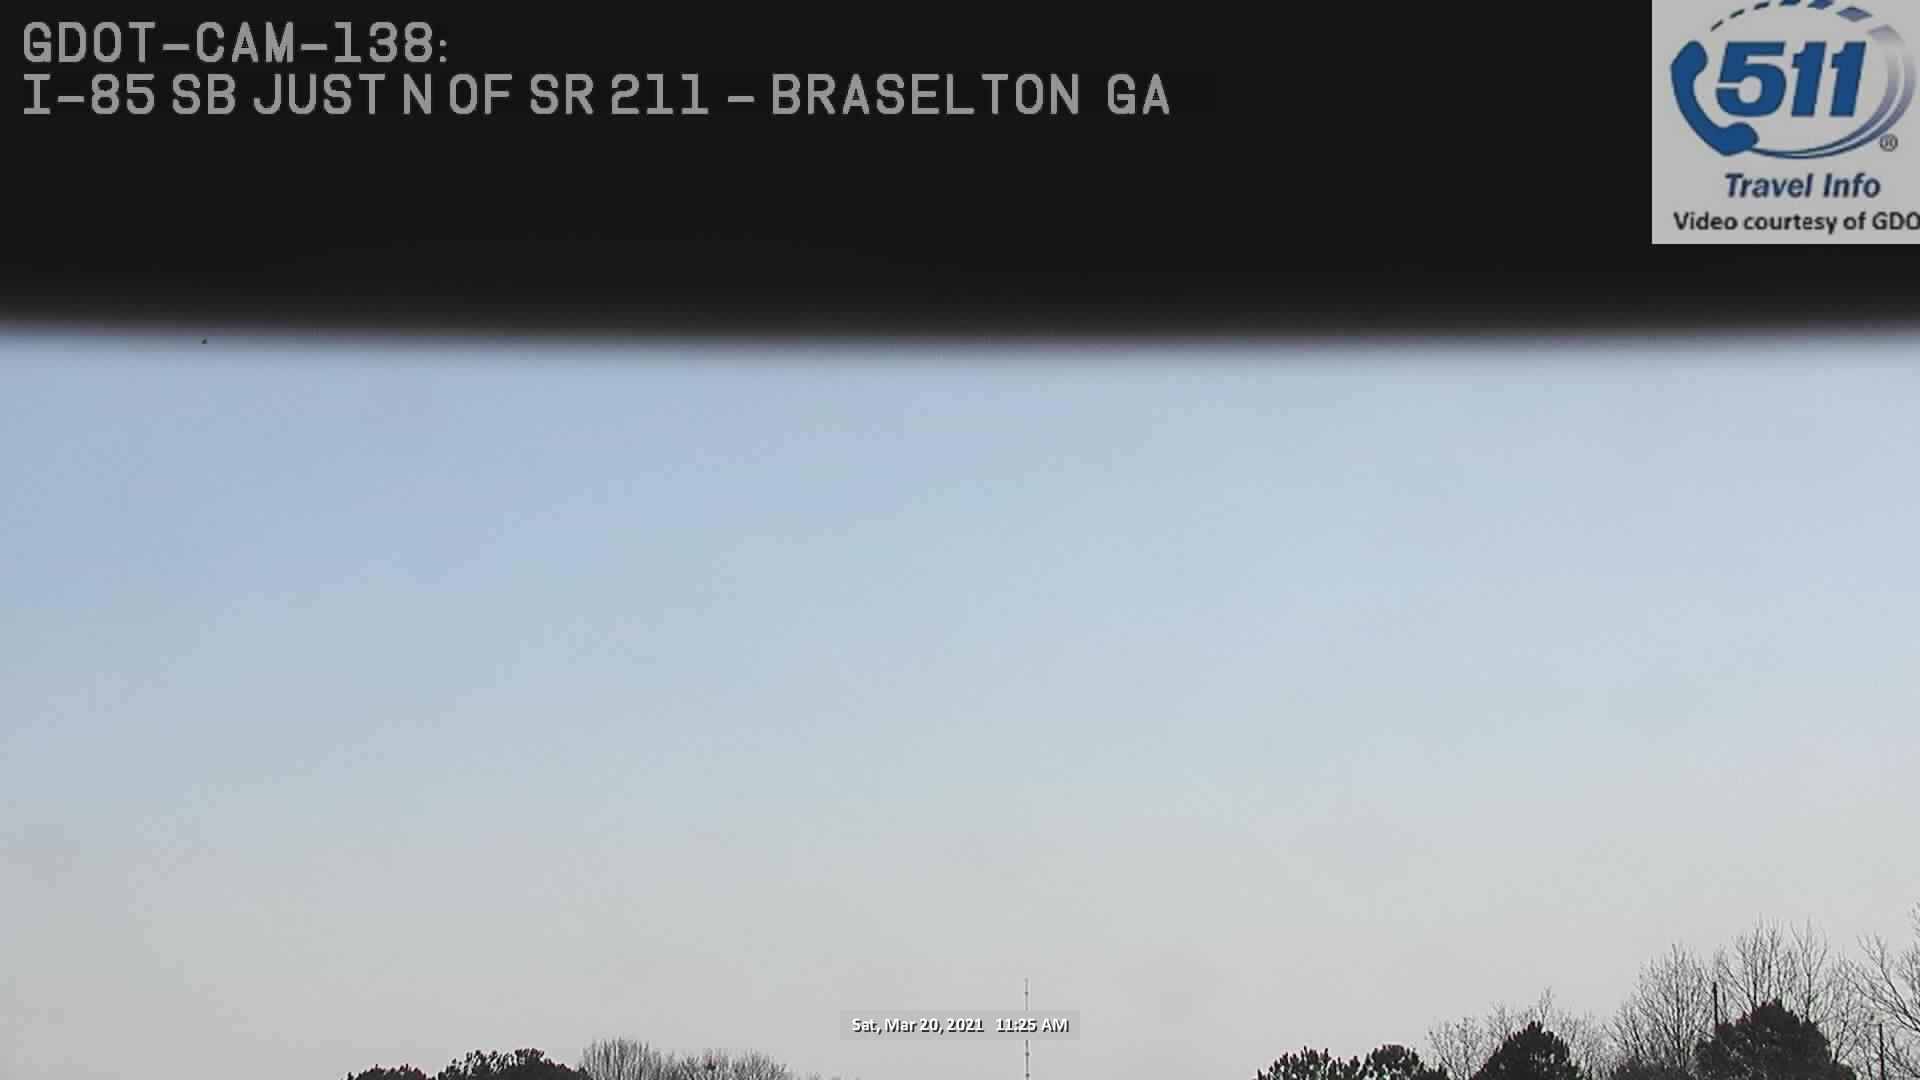 I-85 : JUST N OF SR 211 (S) (46629) - Atlanta and Georgia